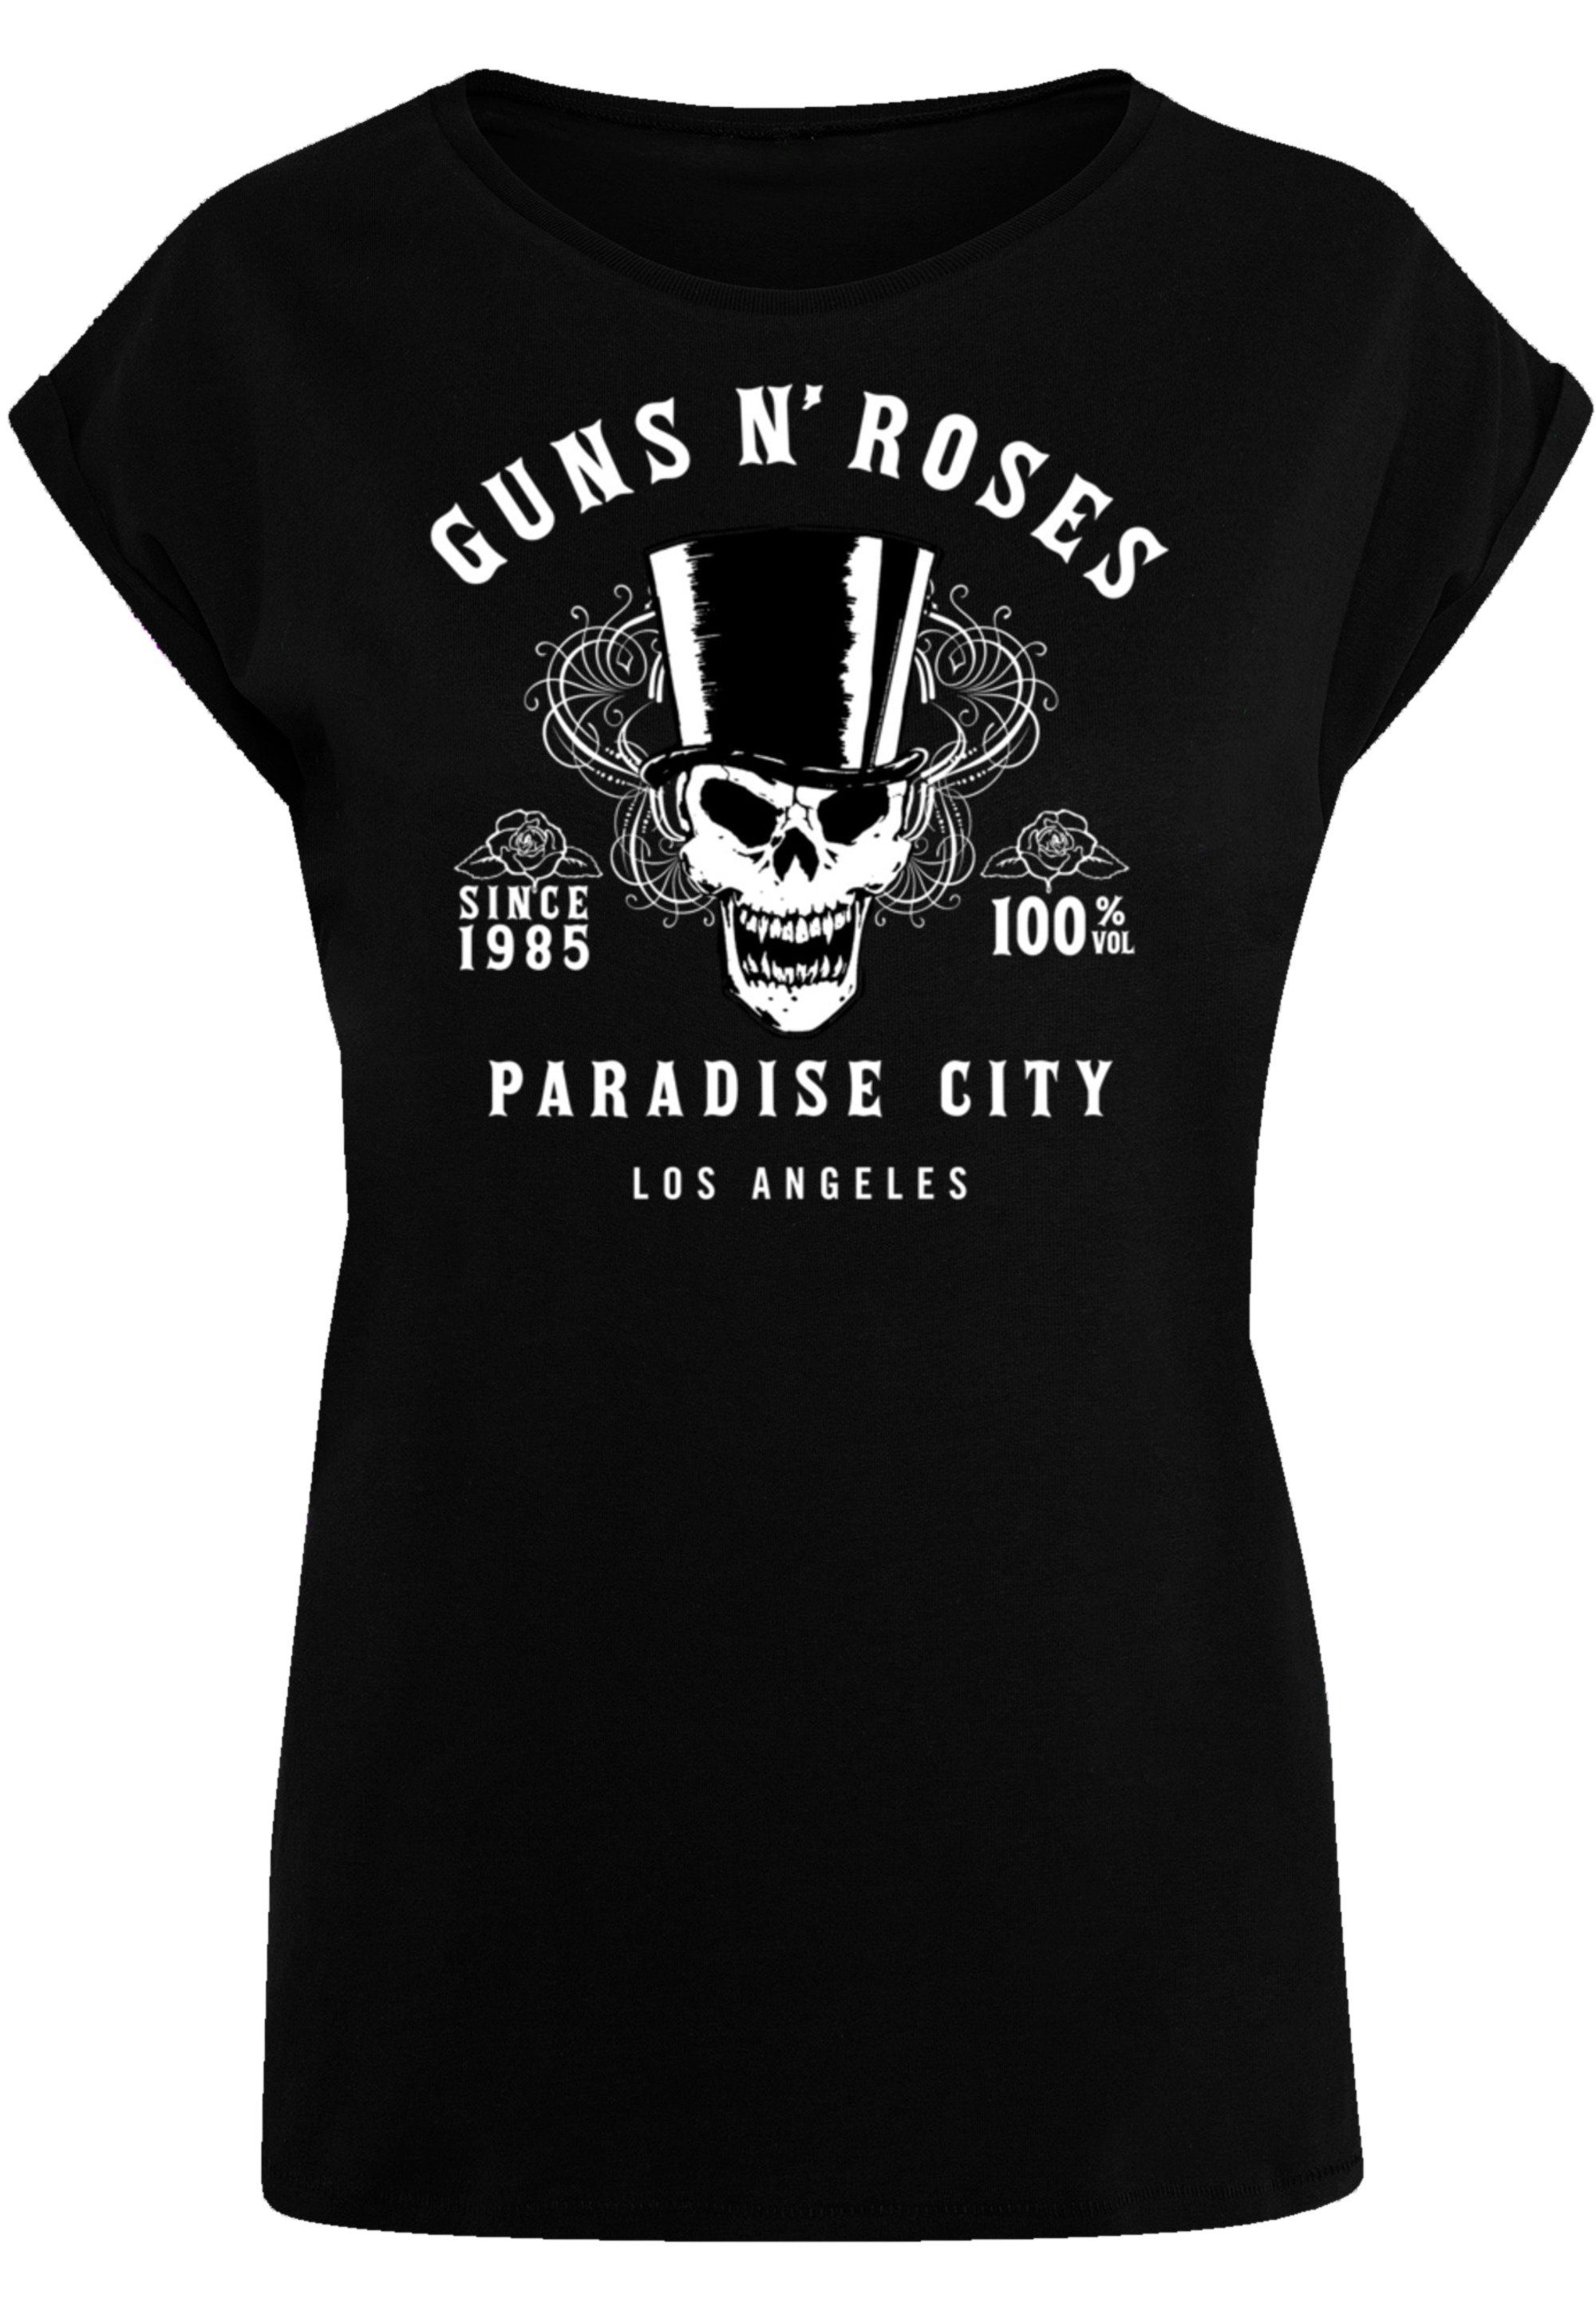 Band Premium schwarz Qualität F4NT4STIC Rock Label Whiskey Guns Roses 'n' T-Shirt